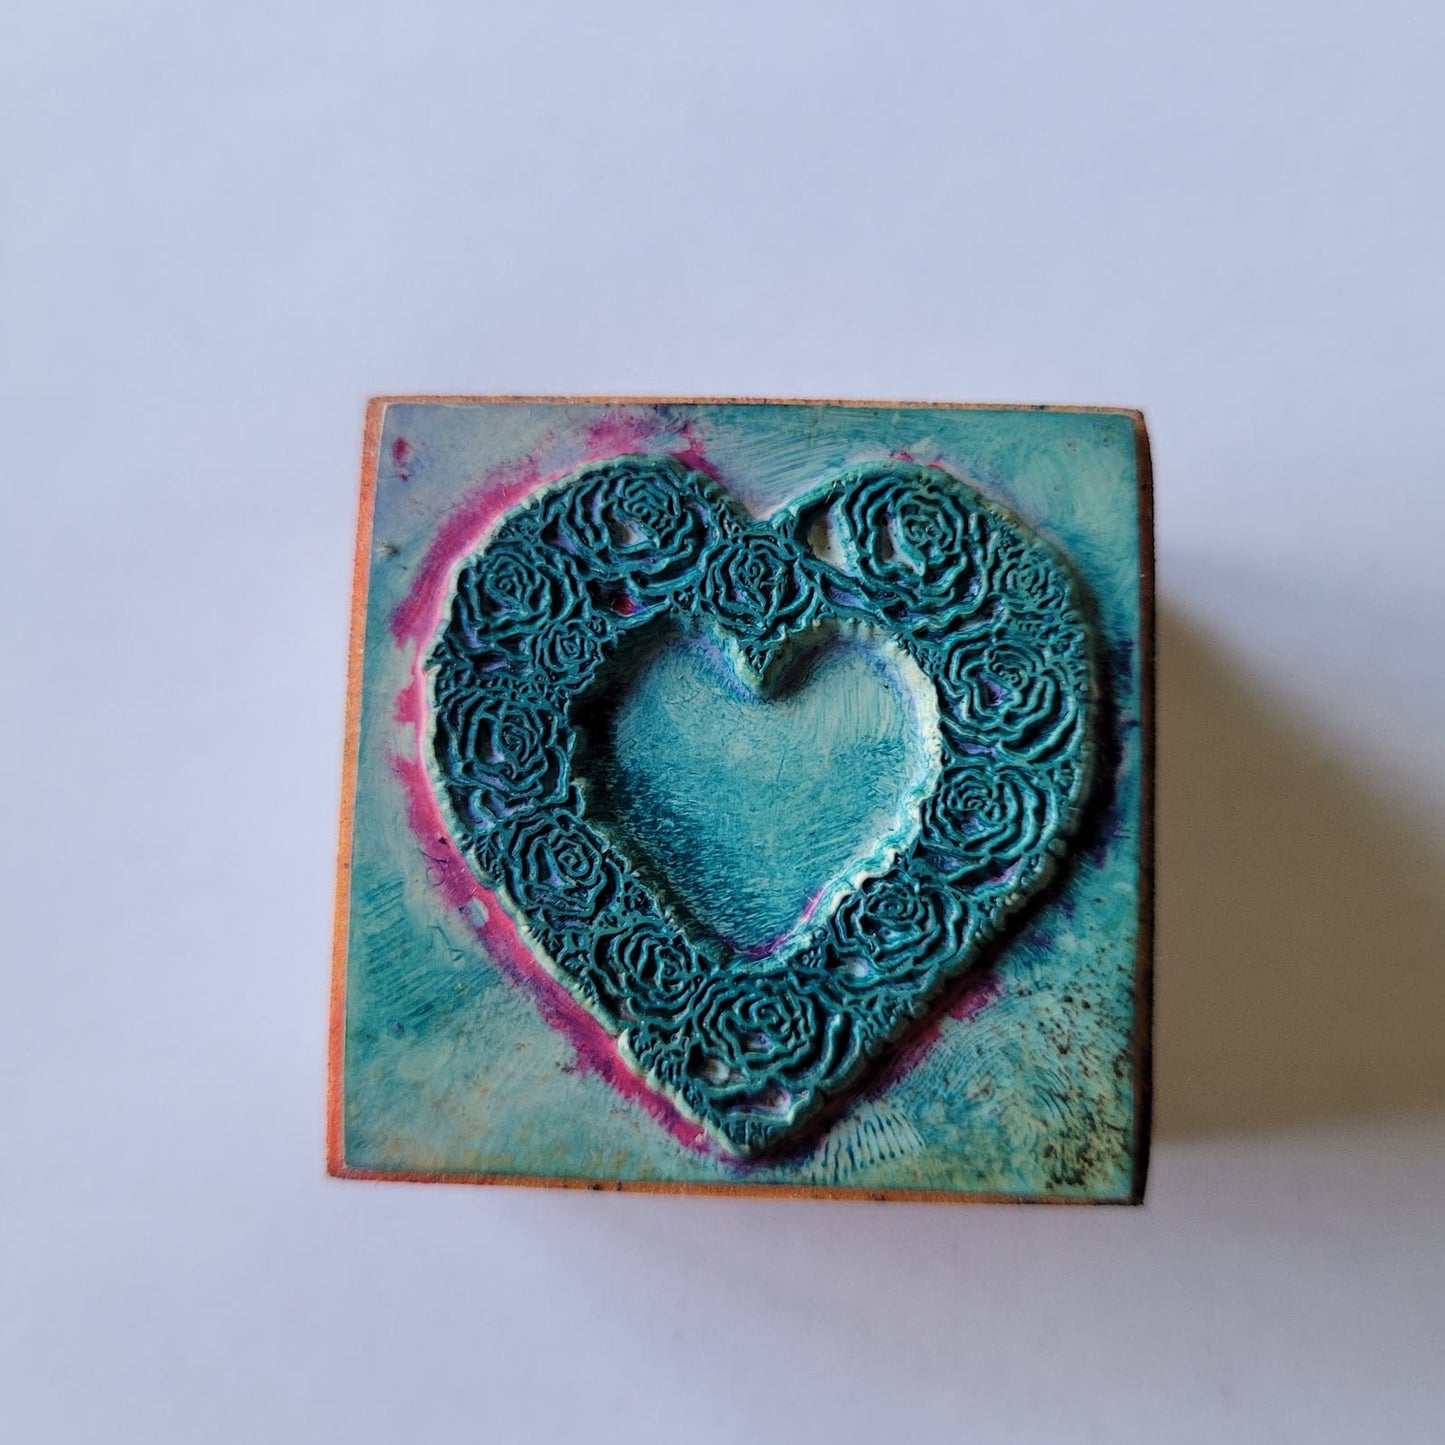 Vintage Rubber Stamp - Floral Heart Wreath